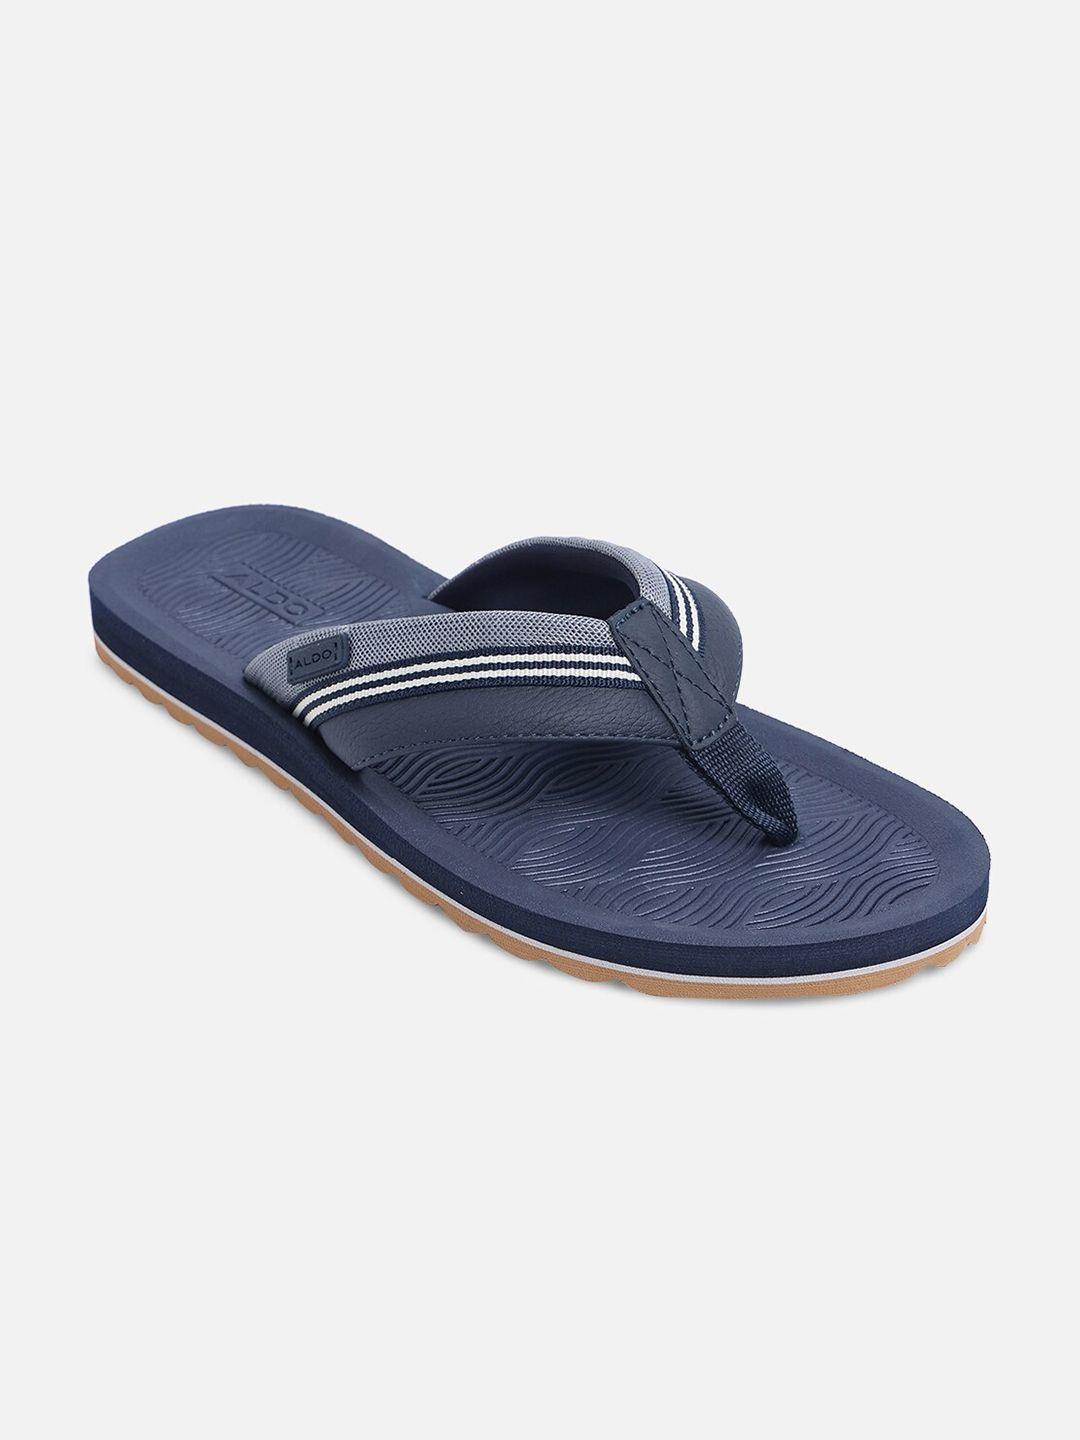 aldo men navy blue thong flip-flops